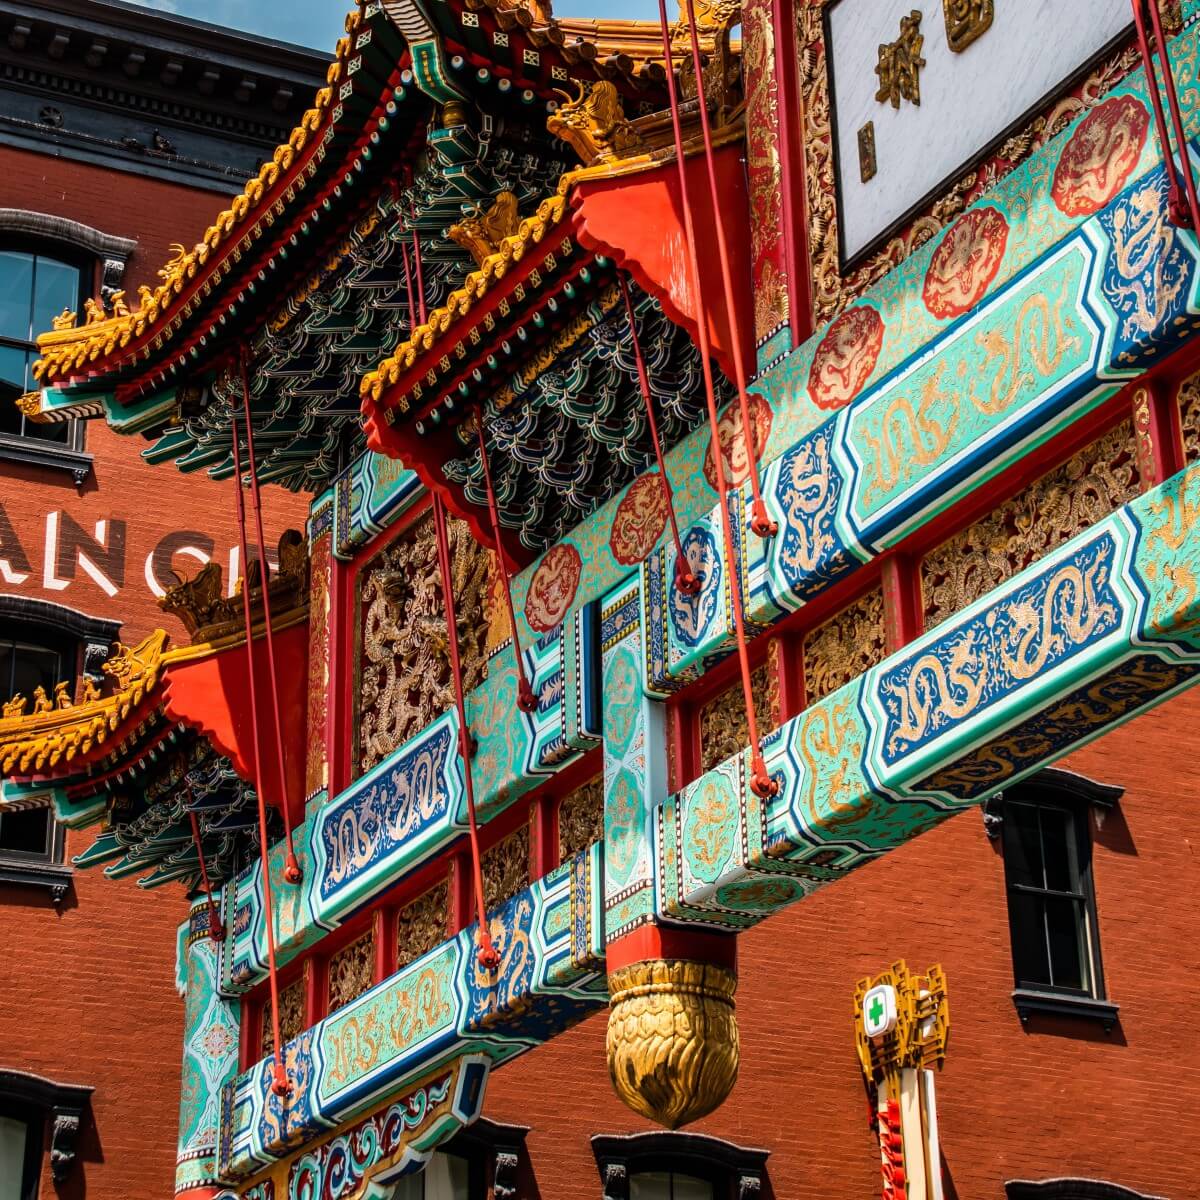 Chinatown, Washington, D.C.